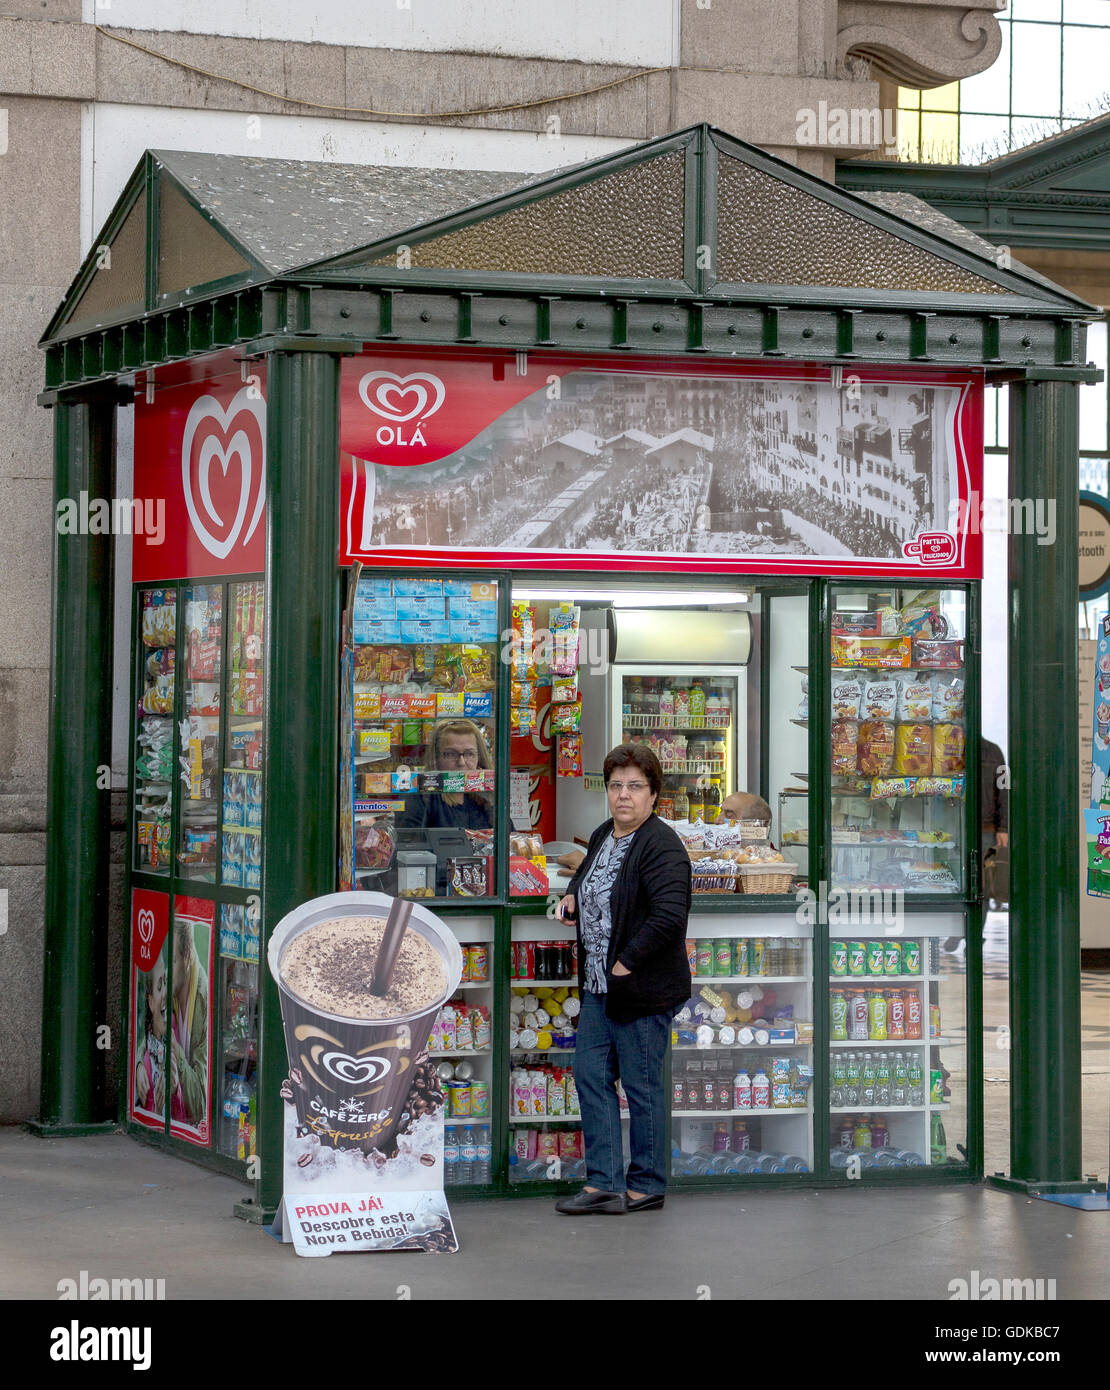 Newsstand with saleswoman, Sao Bento train station, Porto, District of Porto, Portugal, Europe, Travel, Travel Photography Stock Photo